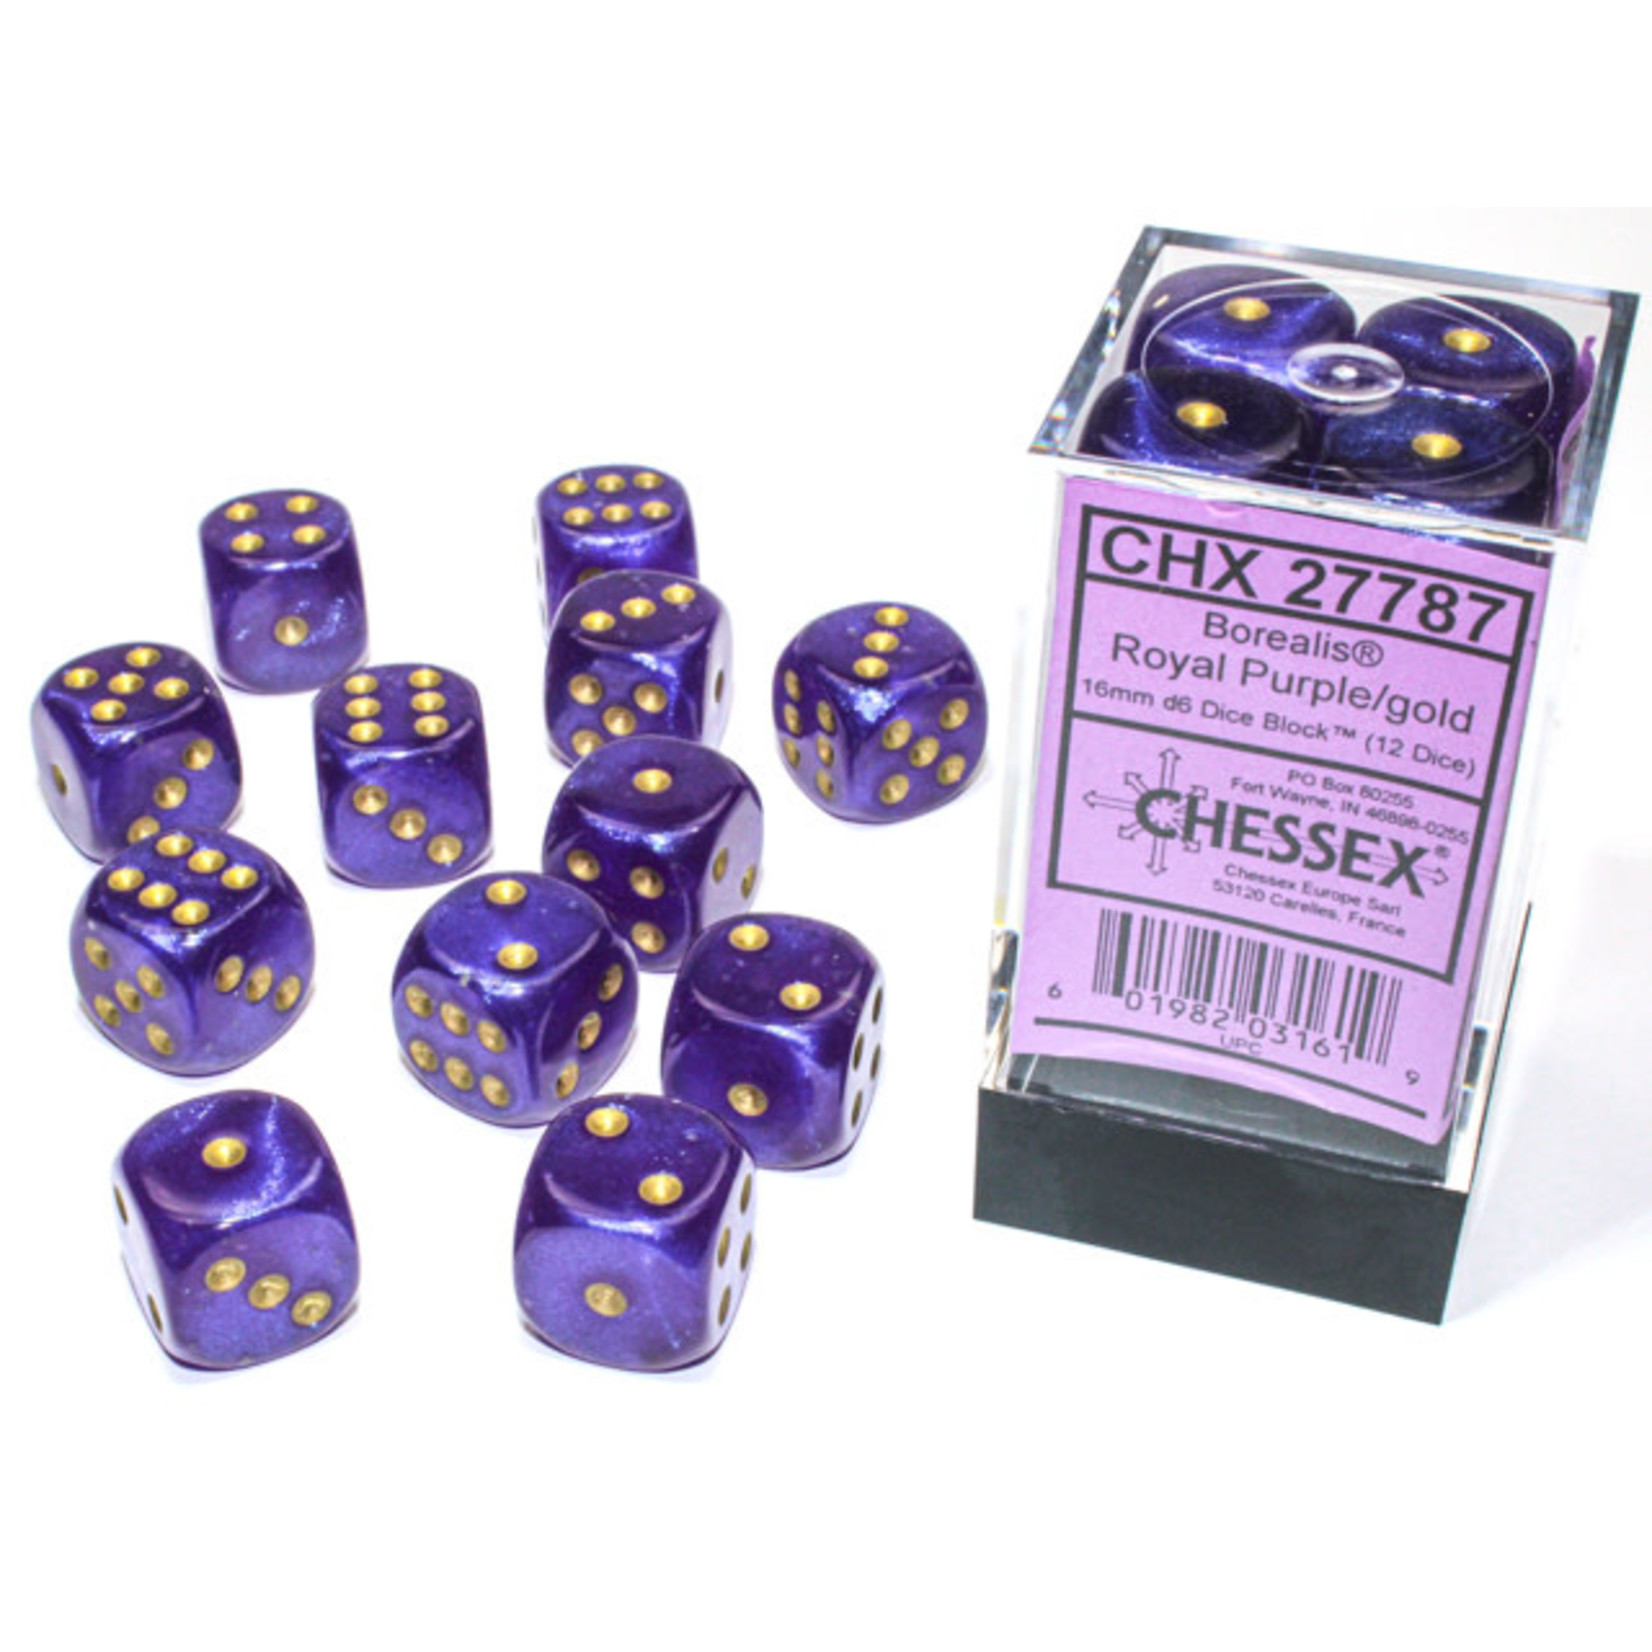 Chessex Borealis: 16mm d6 Royal Purple/gold Luminary Dice (12)